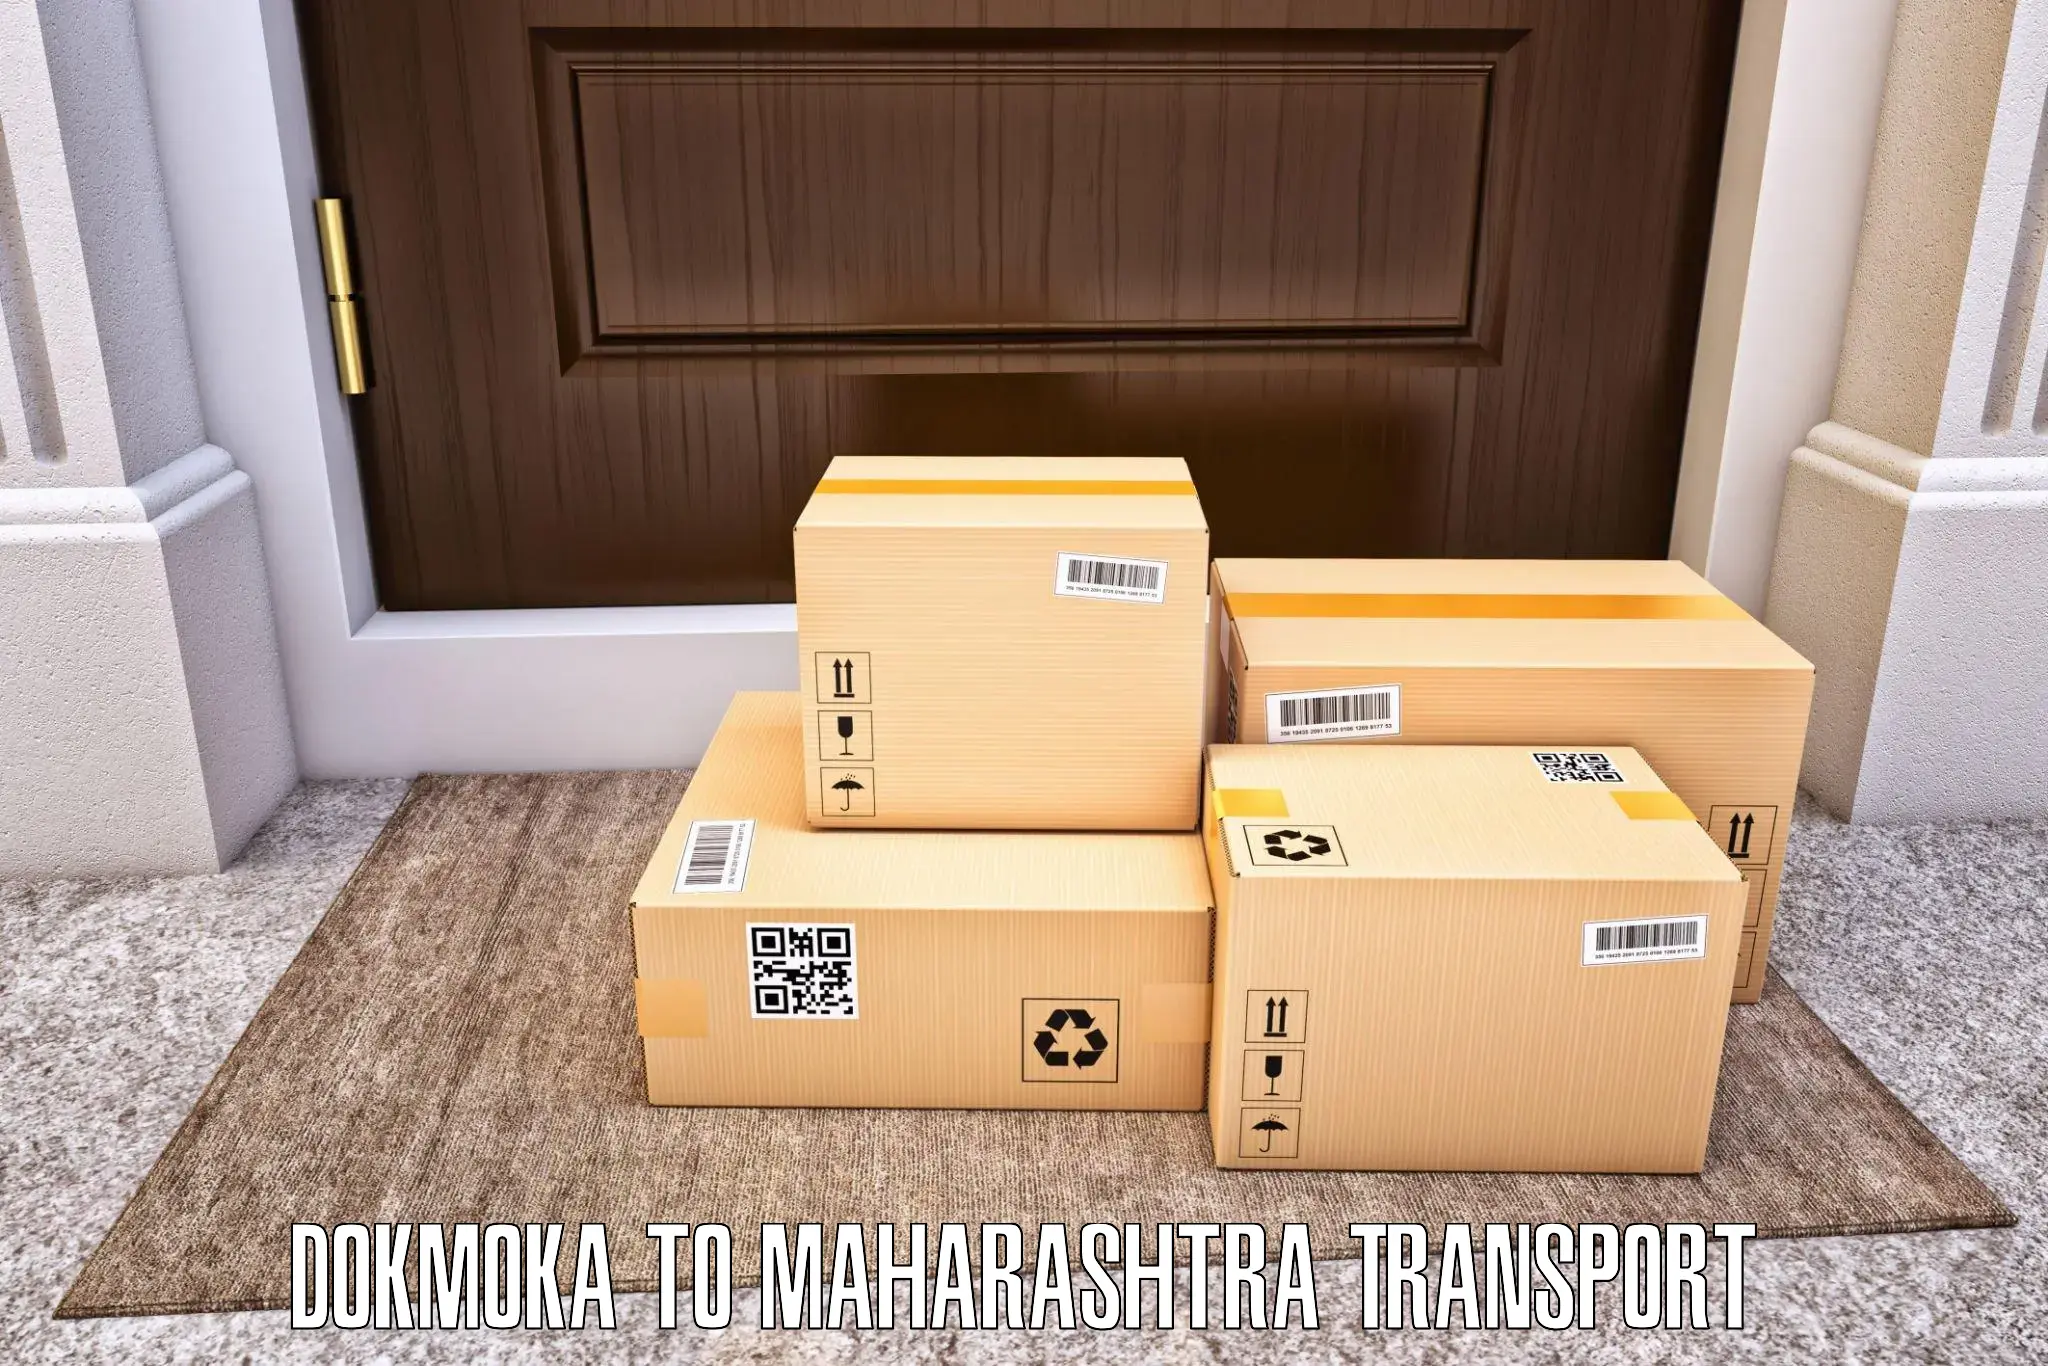 Domestic goods transportation services Dokmoka to Patan Satara